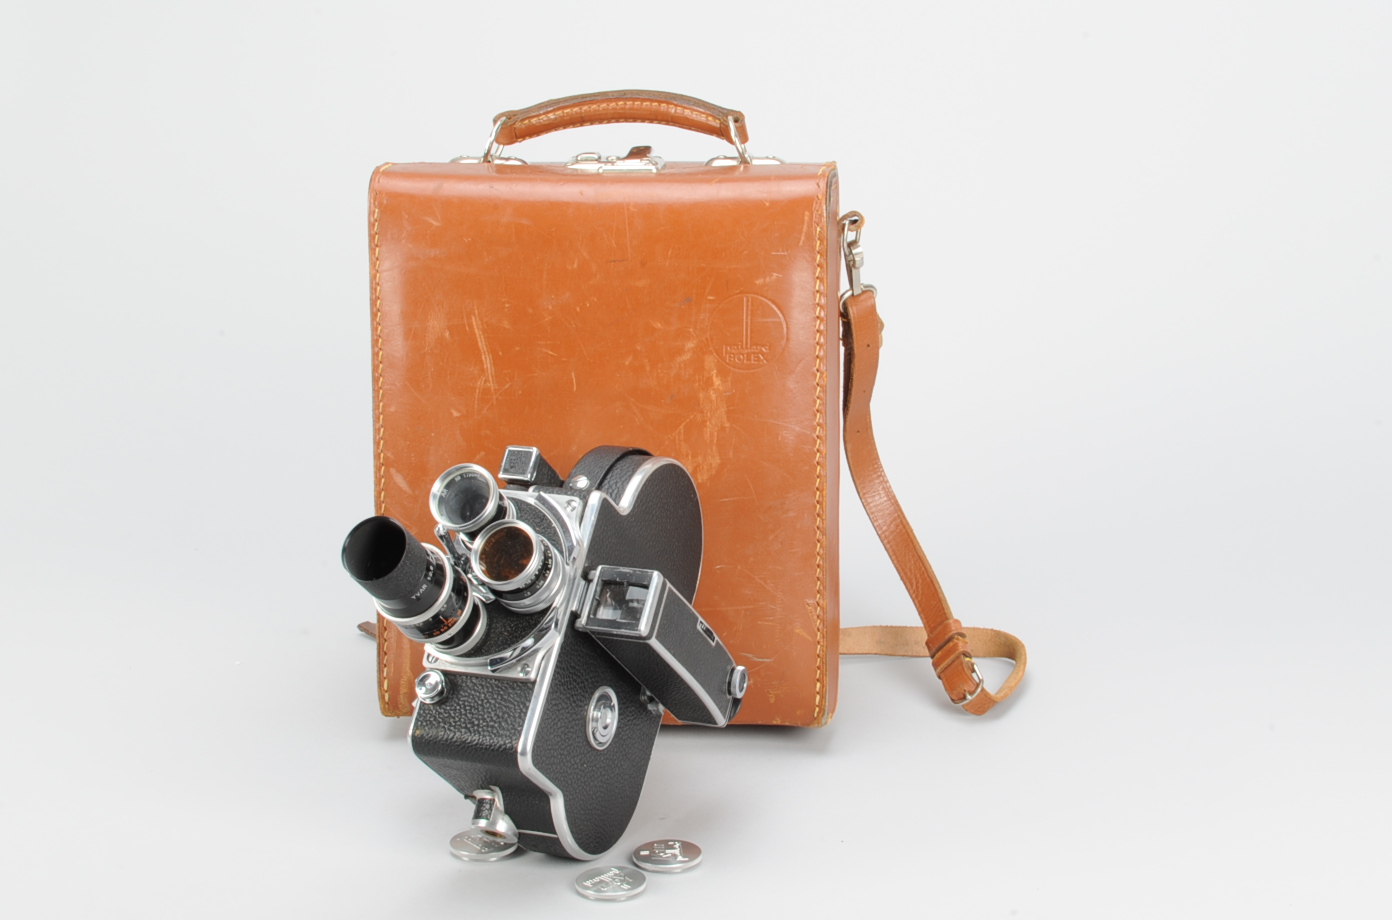 A Paillard Bolex H16 Non-Reflex Cine Camera, 16mm, serial no. 86092, 1953, motor runs, round base,